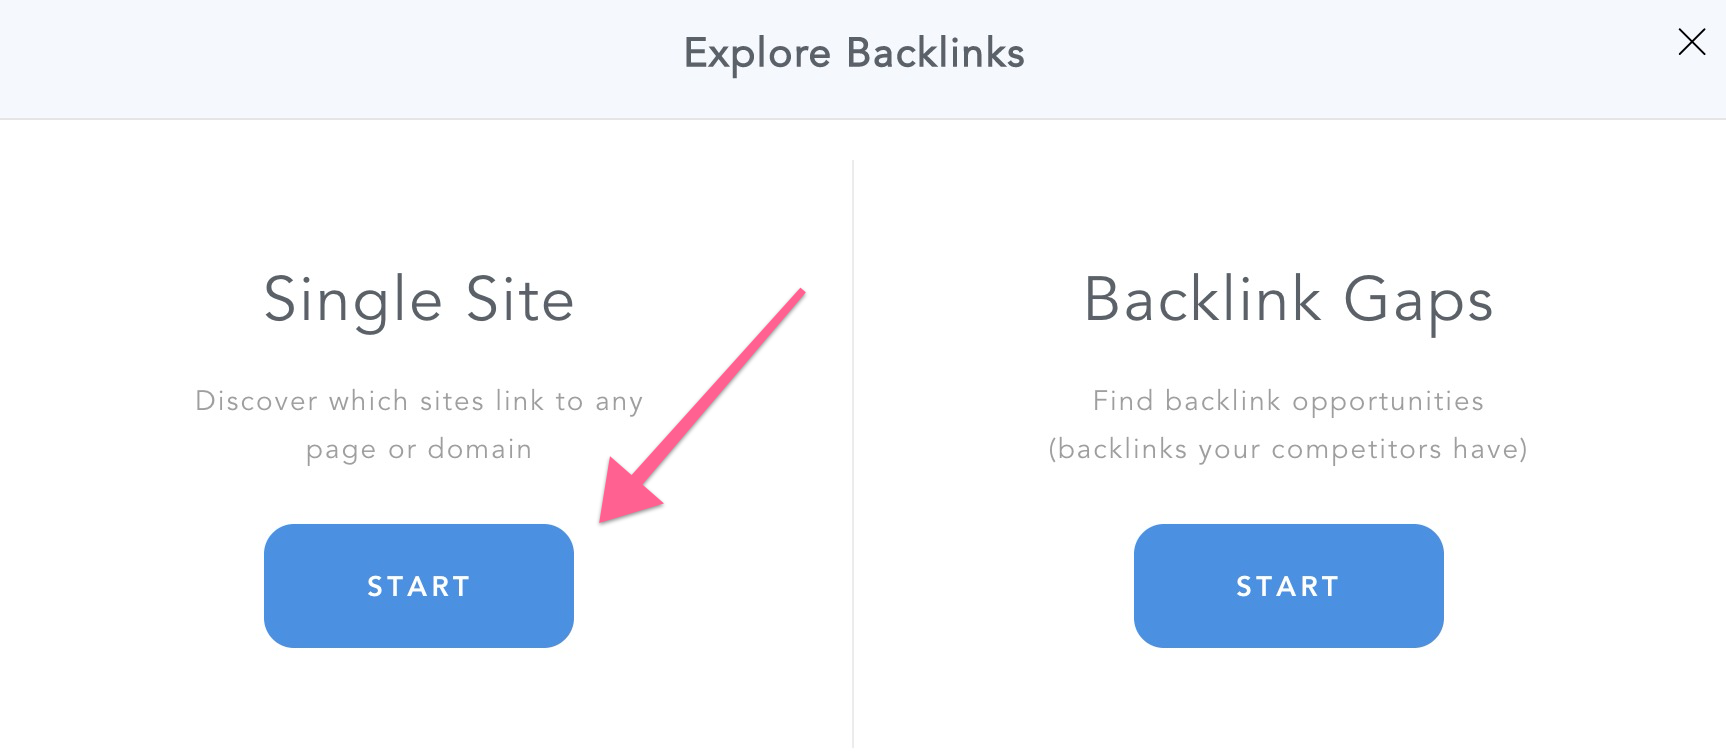 Explore Backlinks